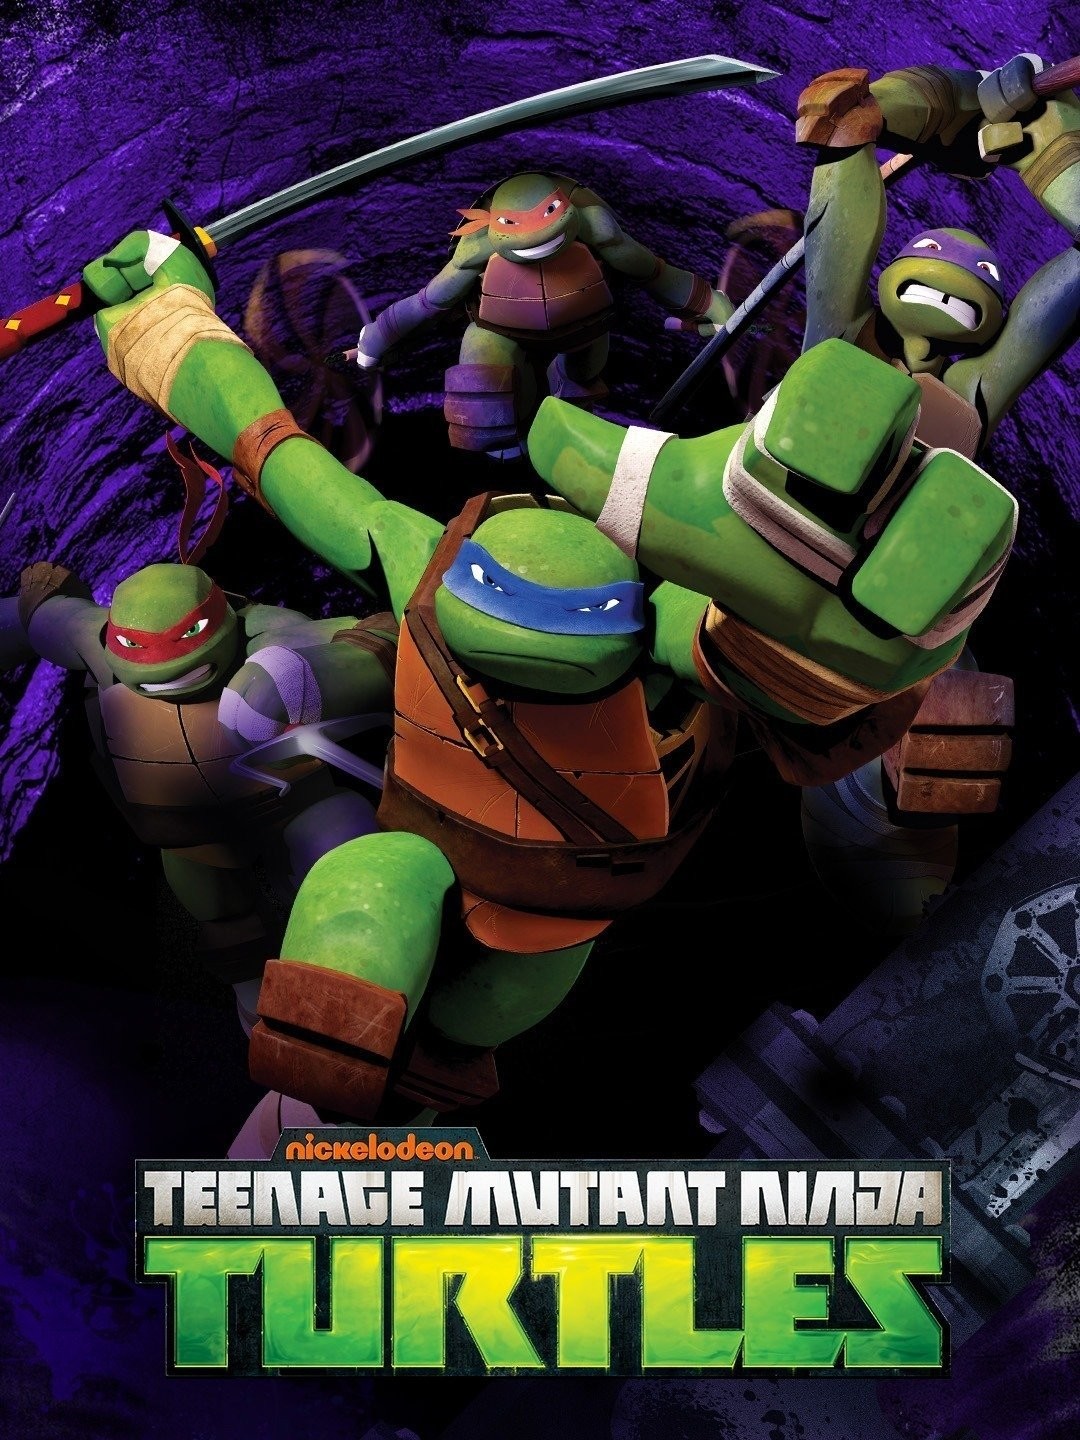 Watch Teenage Mutant Ninja Turtles (2012) Season 1 Episode 1: Rise of the  Turtles Part 1 - Full show on Paramount Plus